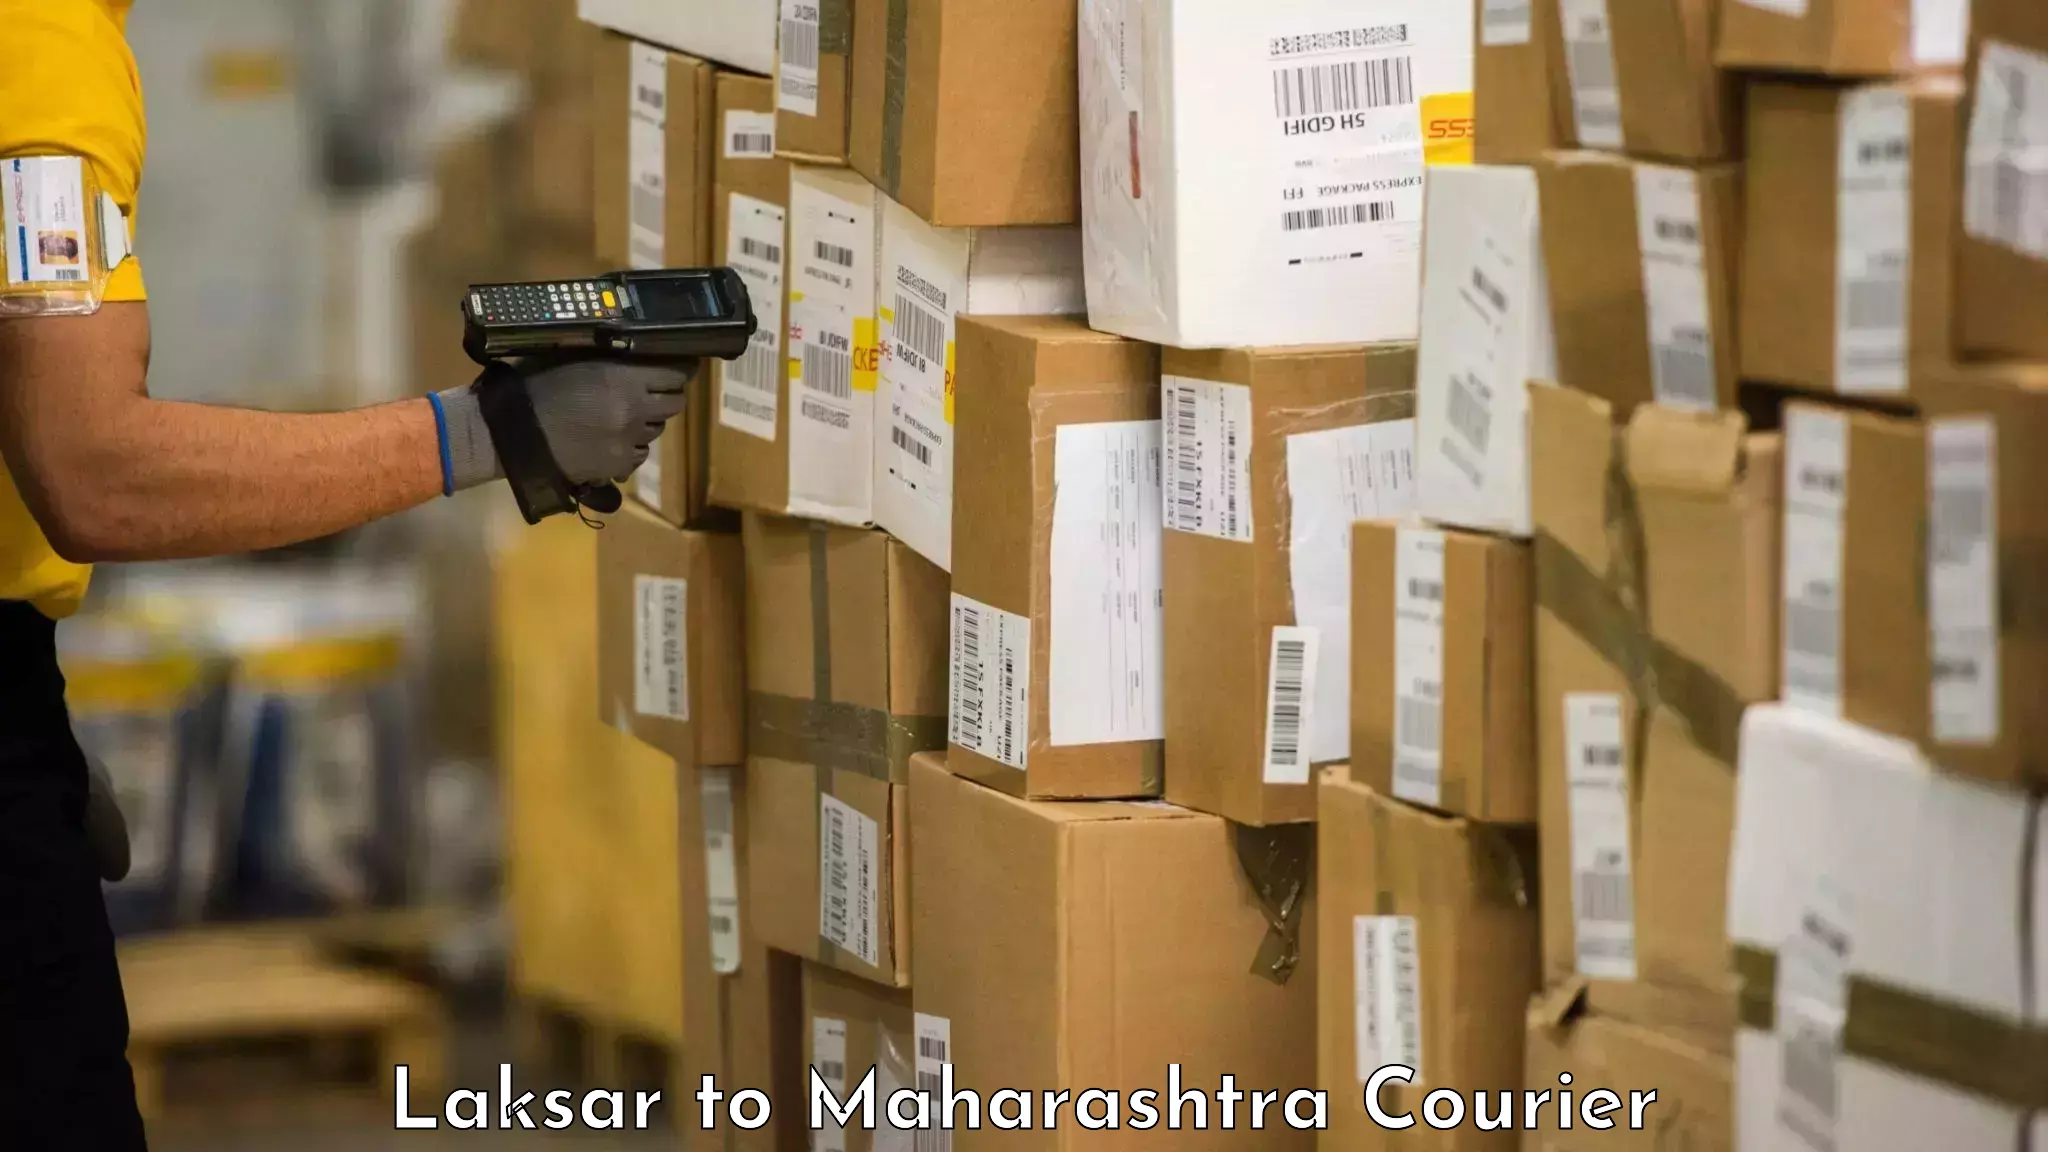 Luggage transport consultancy Laksar to Maharashtra